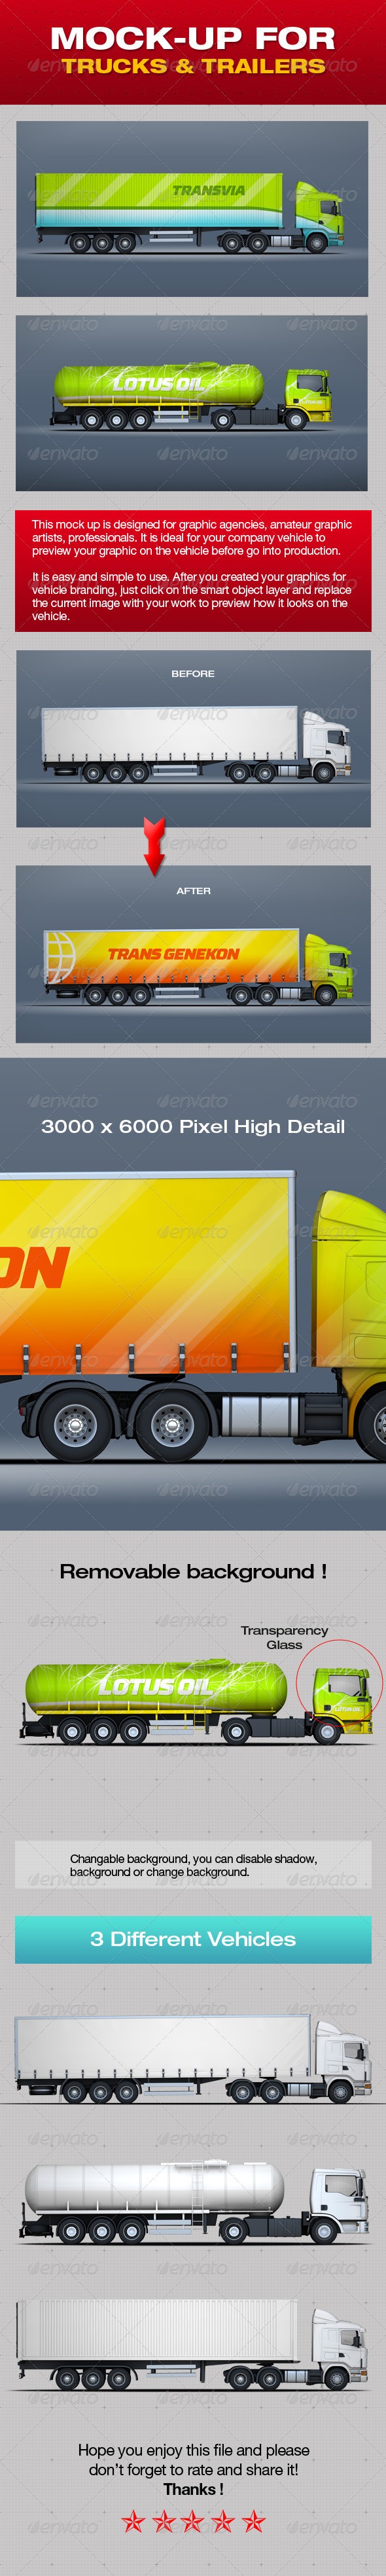 Truck_Presentation.jpg